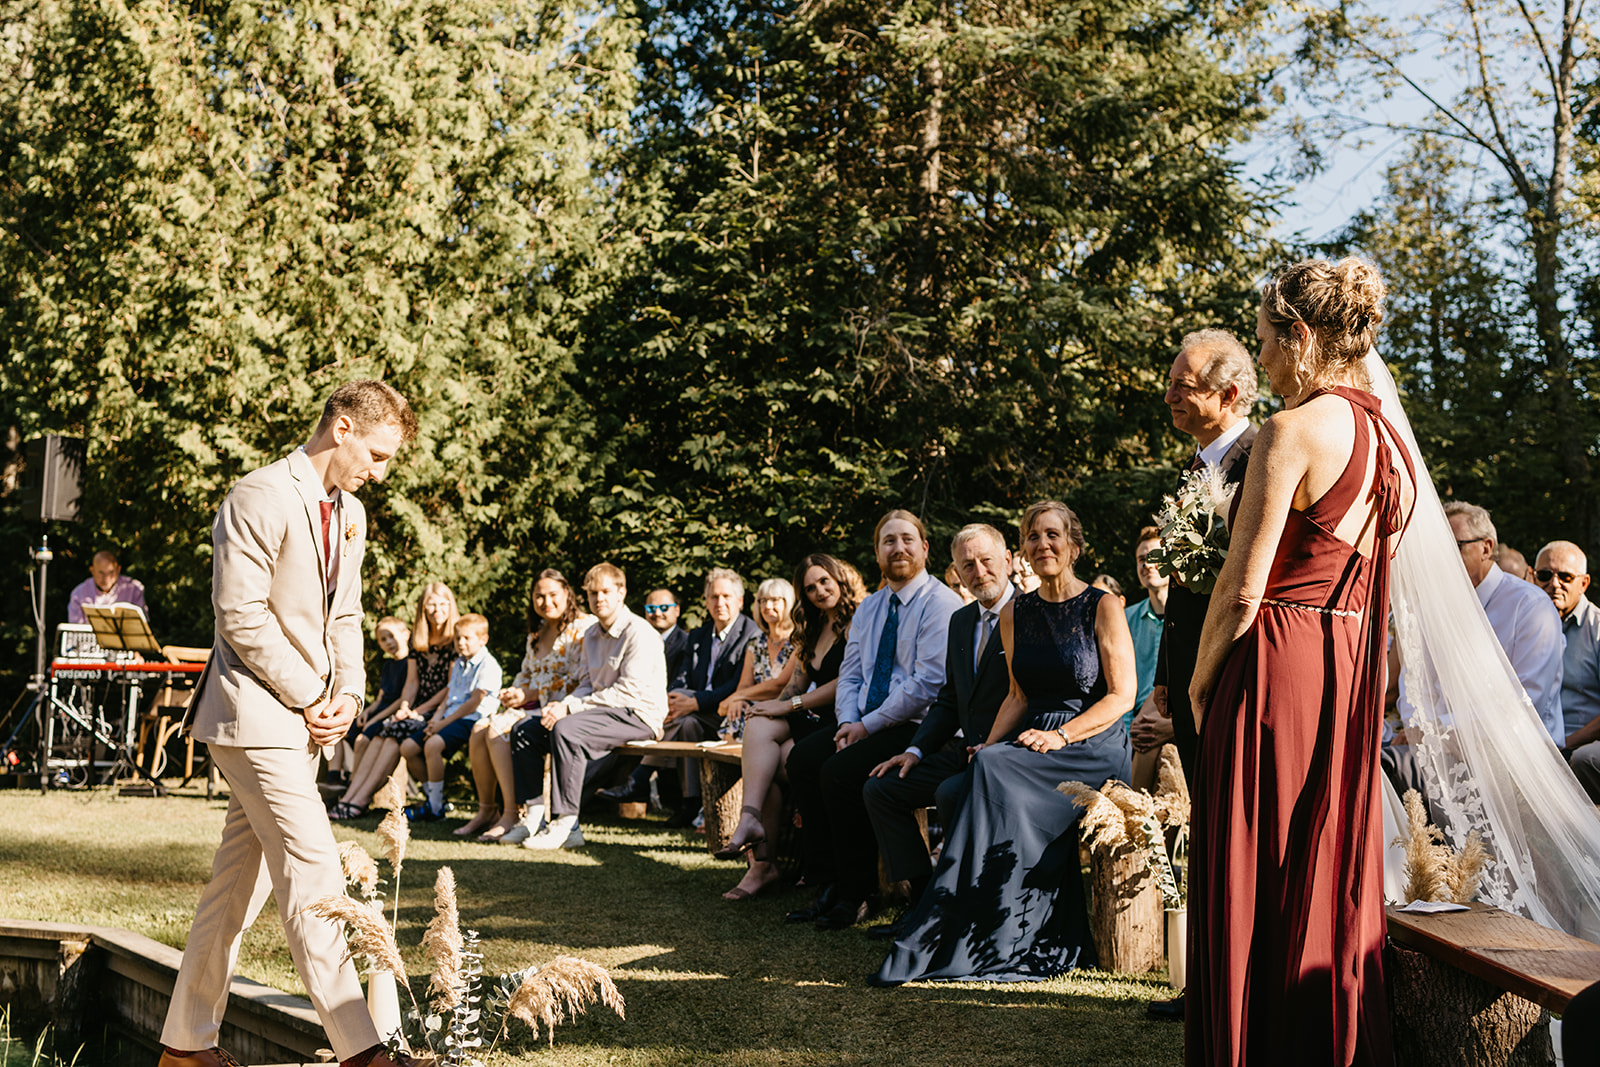 Maddie Lymburner and Chris Hartwig's wedding ceremony